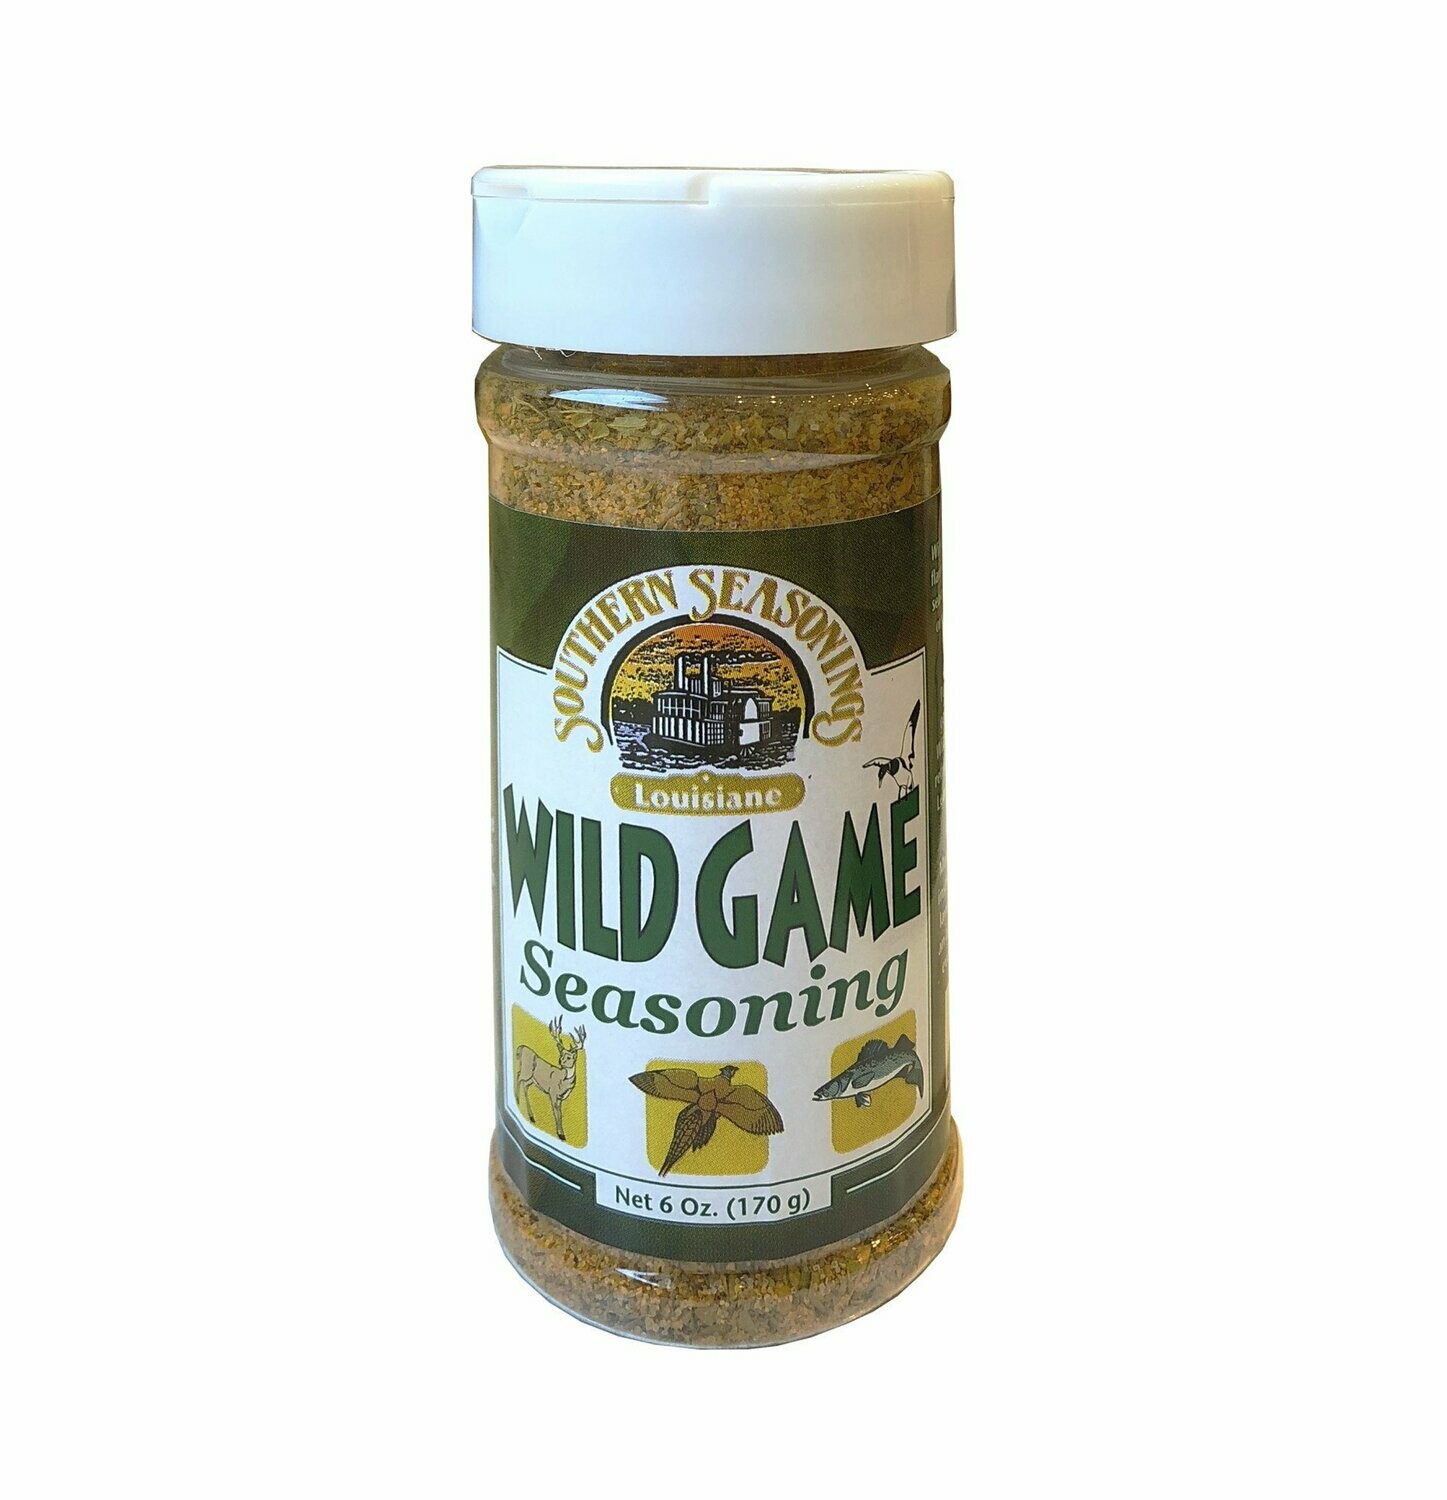 Wild Game Rubs and Seasoning Blends